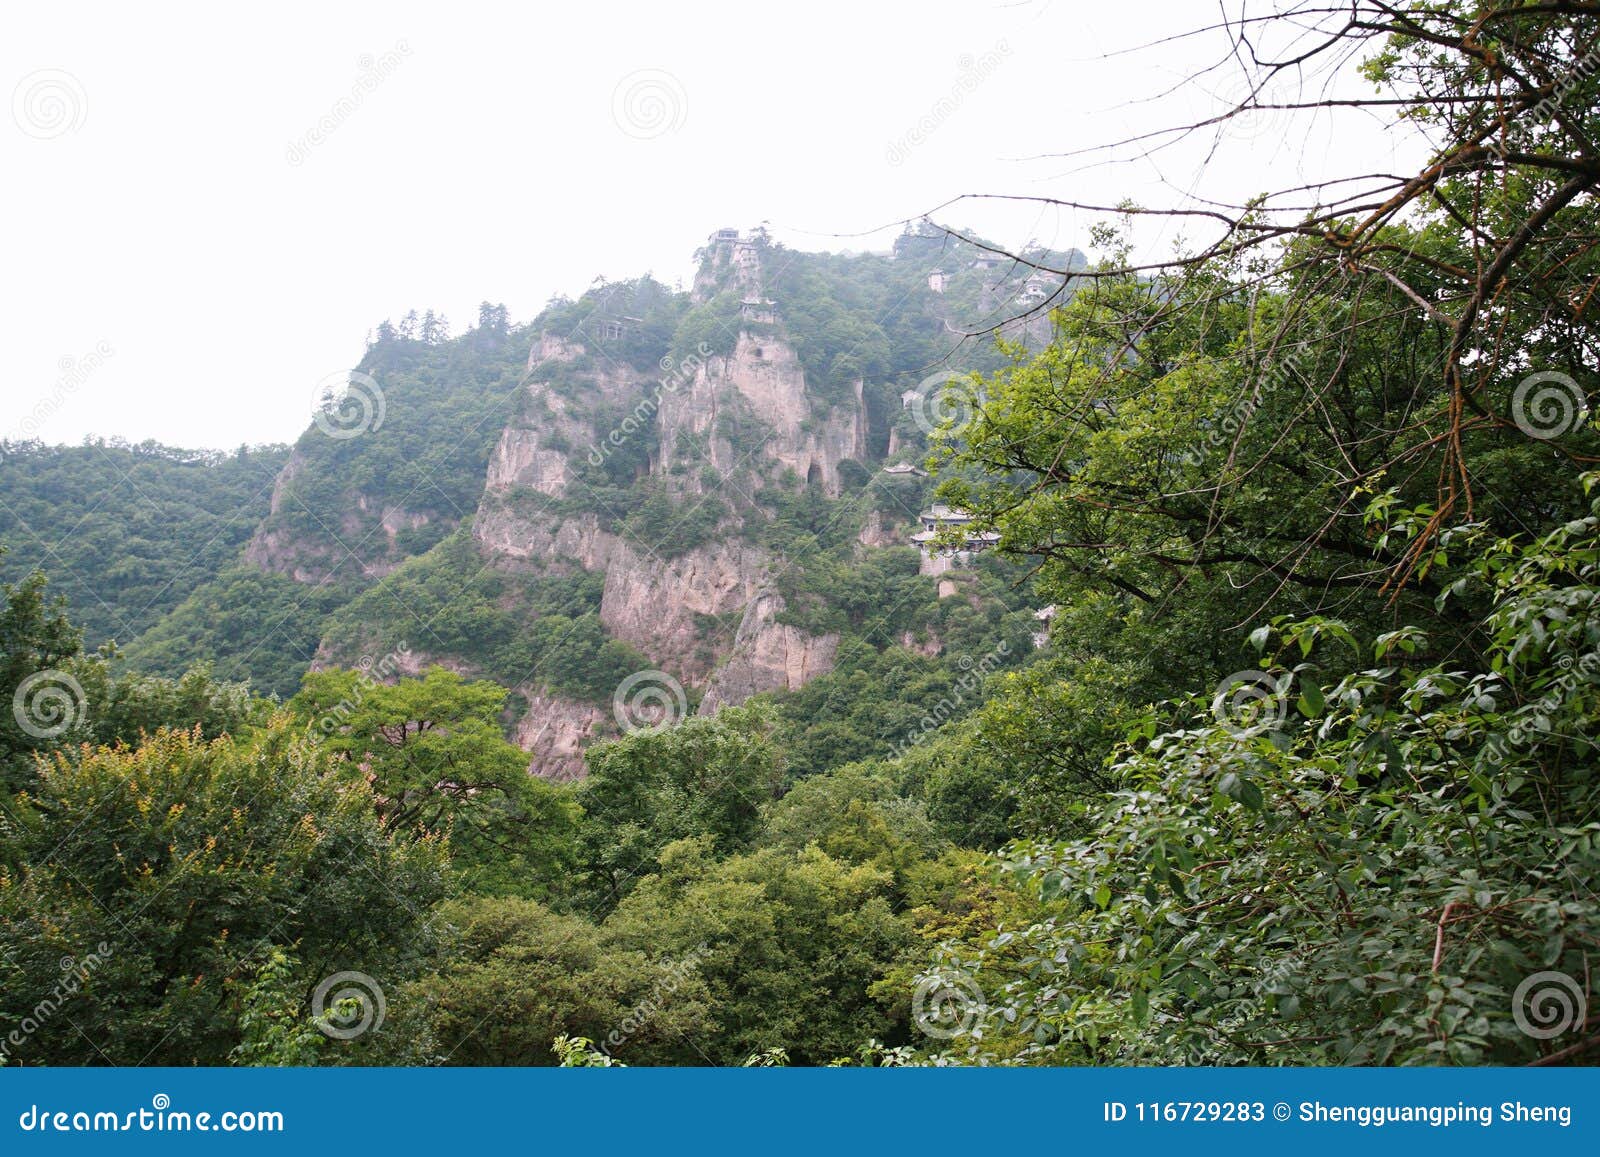 Kongtong mountain stock image. Image of meters, xiao - 116729283